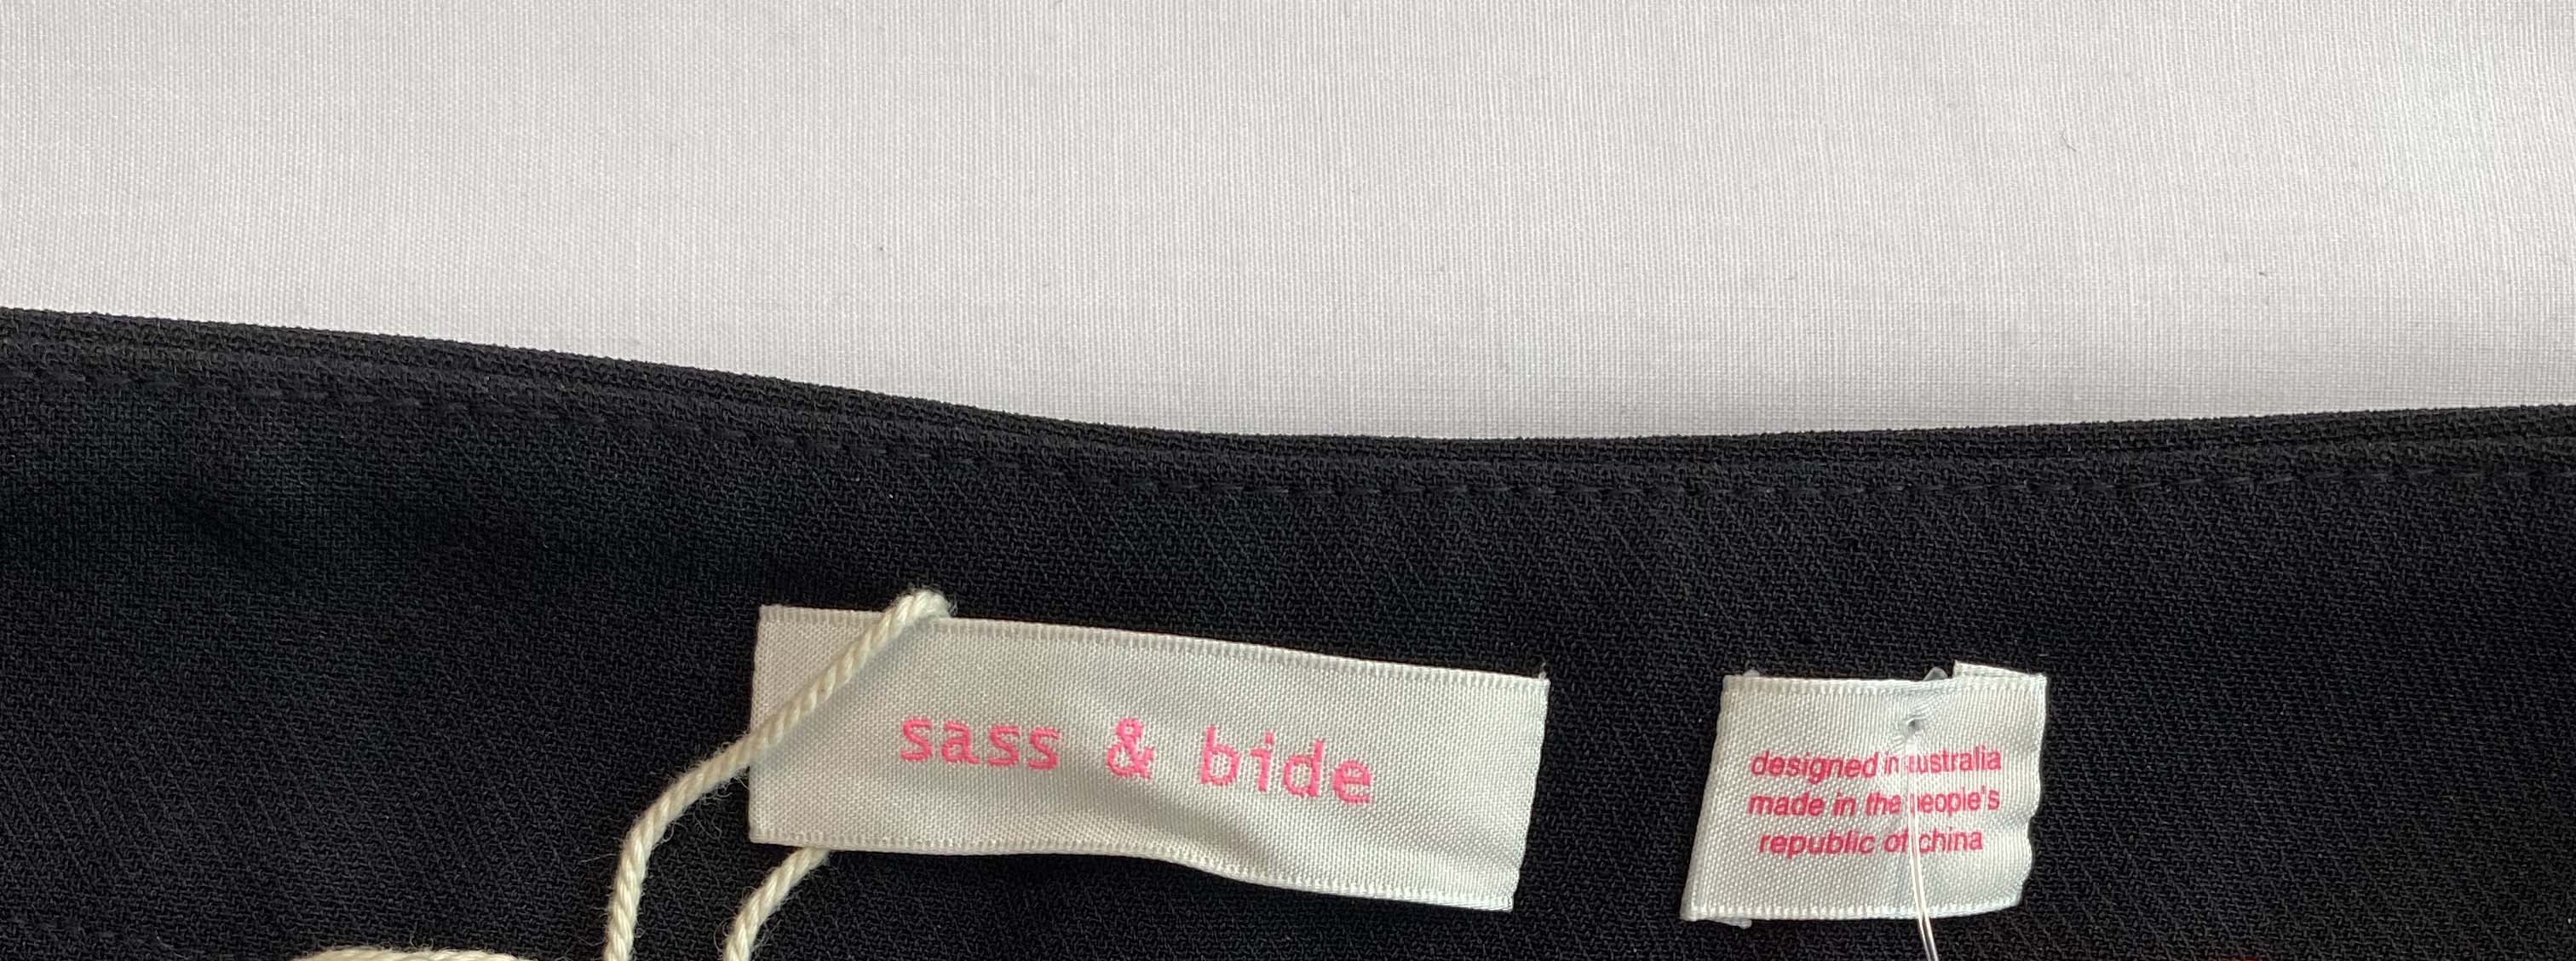 SASS & BIDE Black Pants